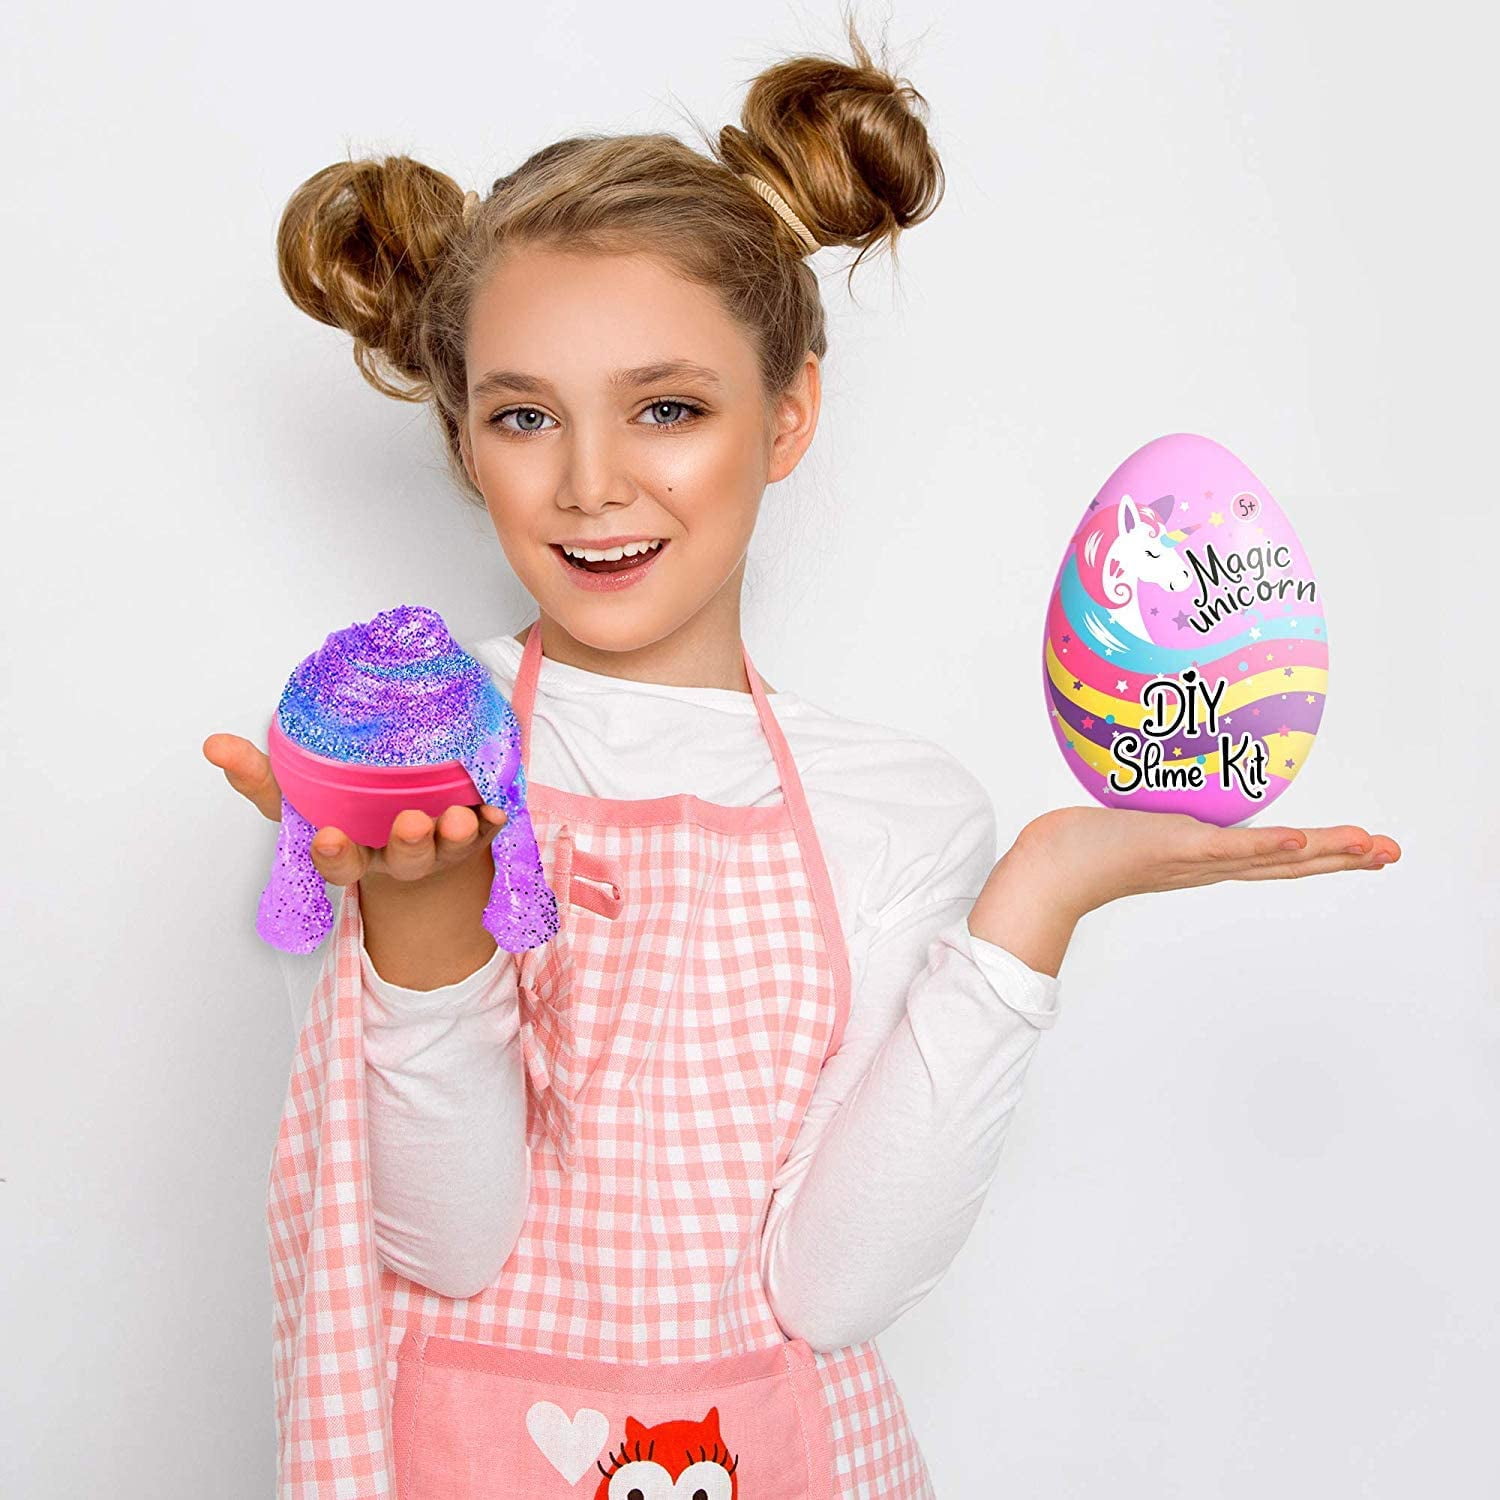 Laevo Unicorn Slime Kit for girls - DIY Slime Kits - Supplies Makes